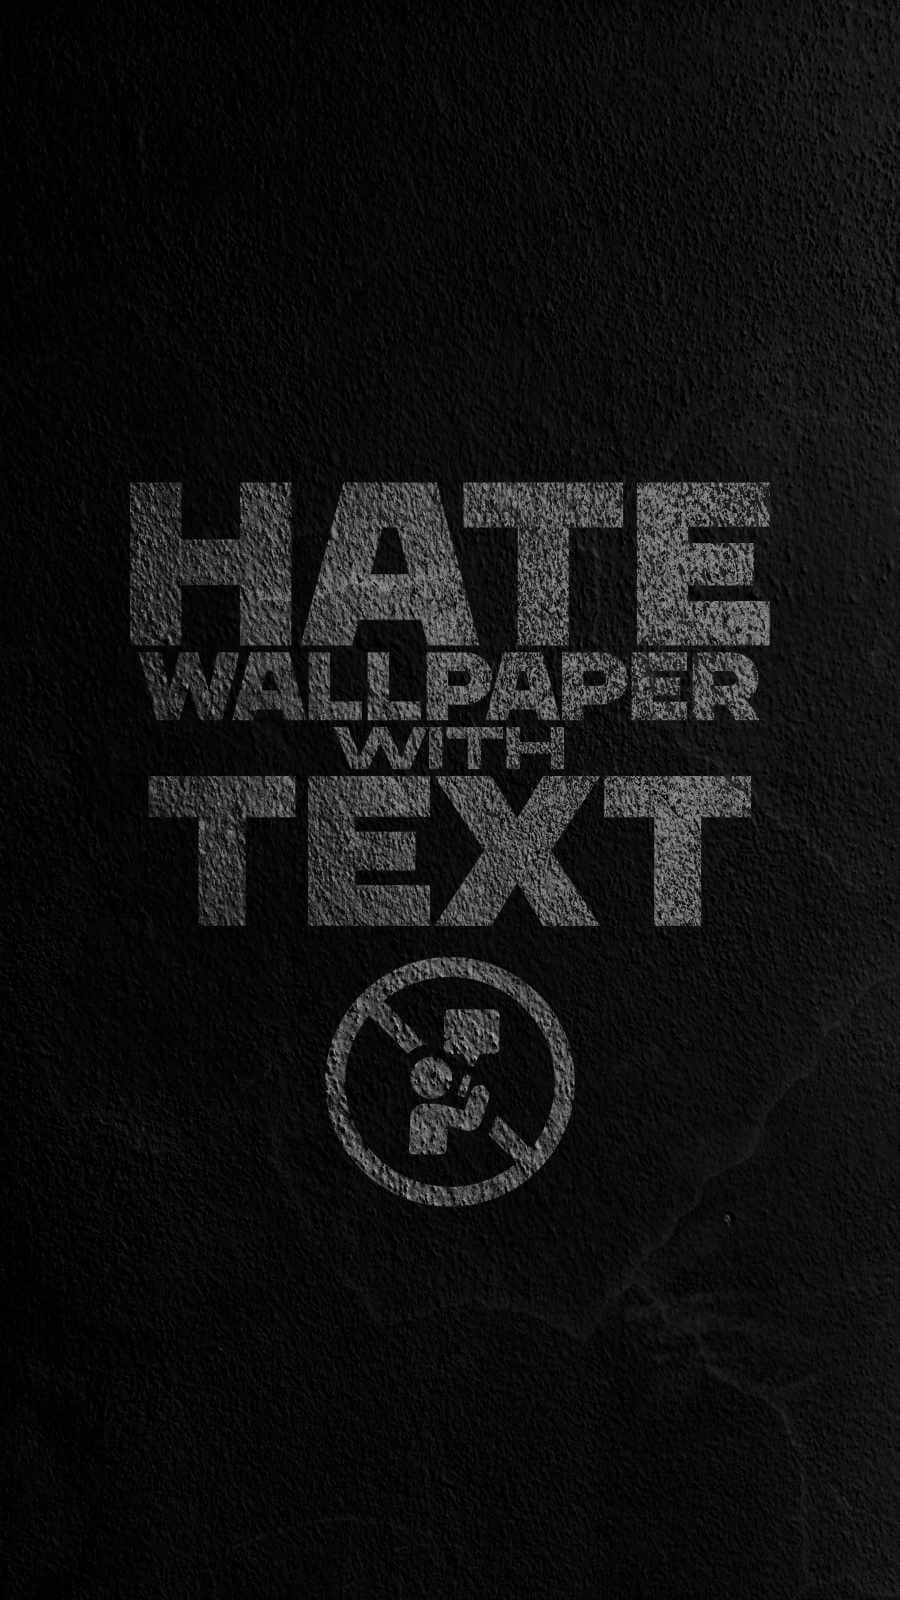 Hatewallpaper Wallpapers